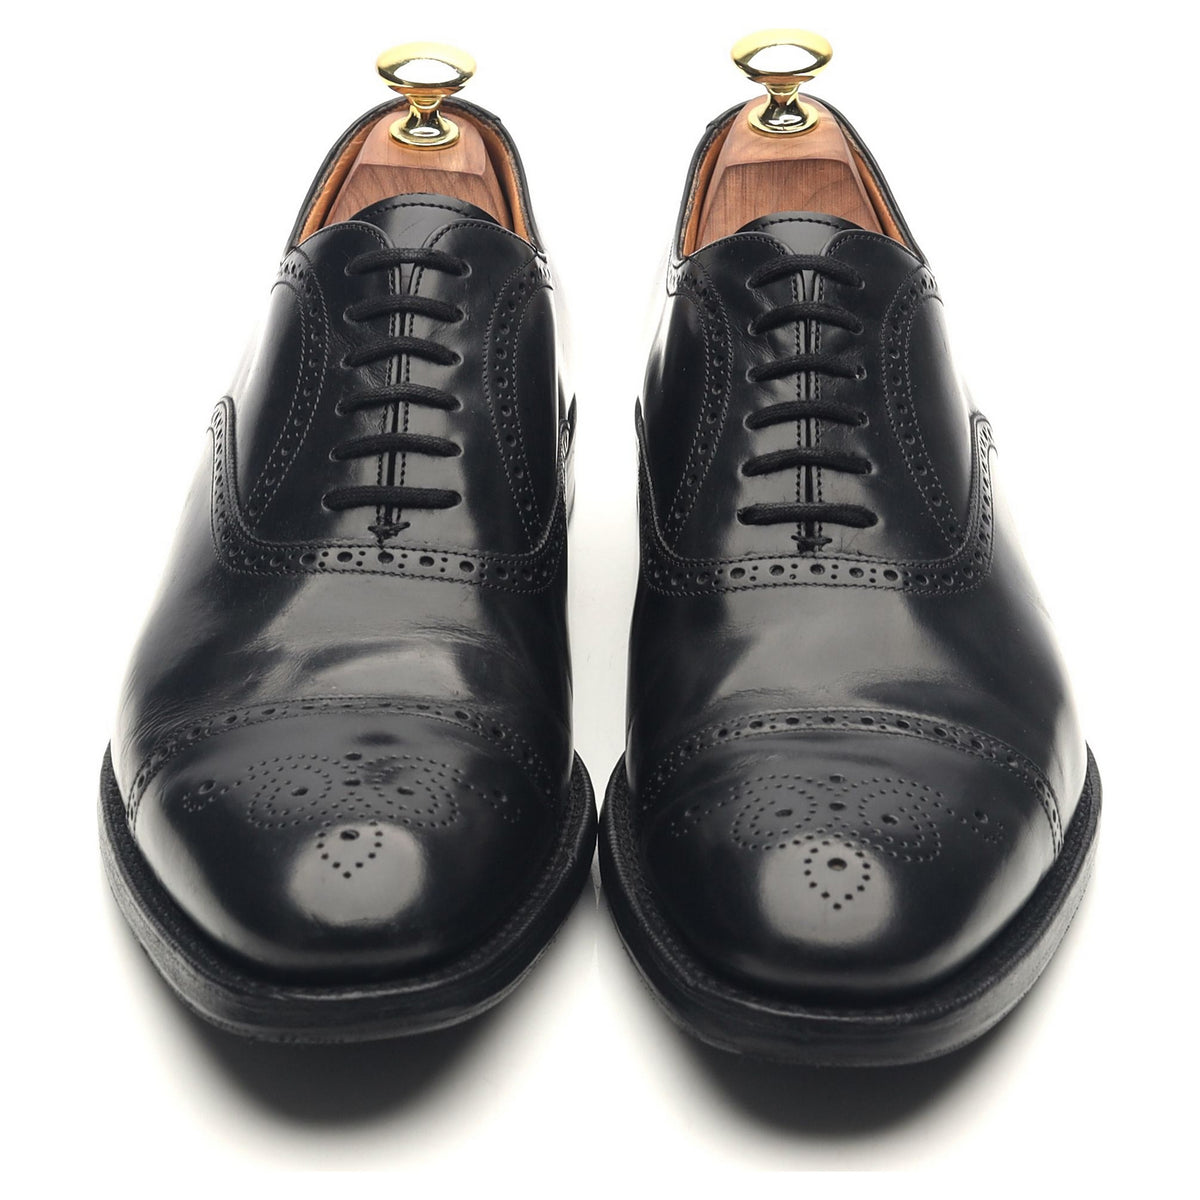 &#39;London&#39; Black Leather Oxford Semi Brogues UK 7.5 F